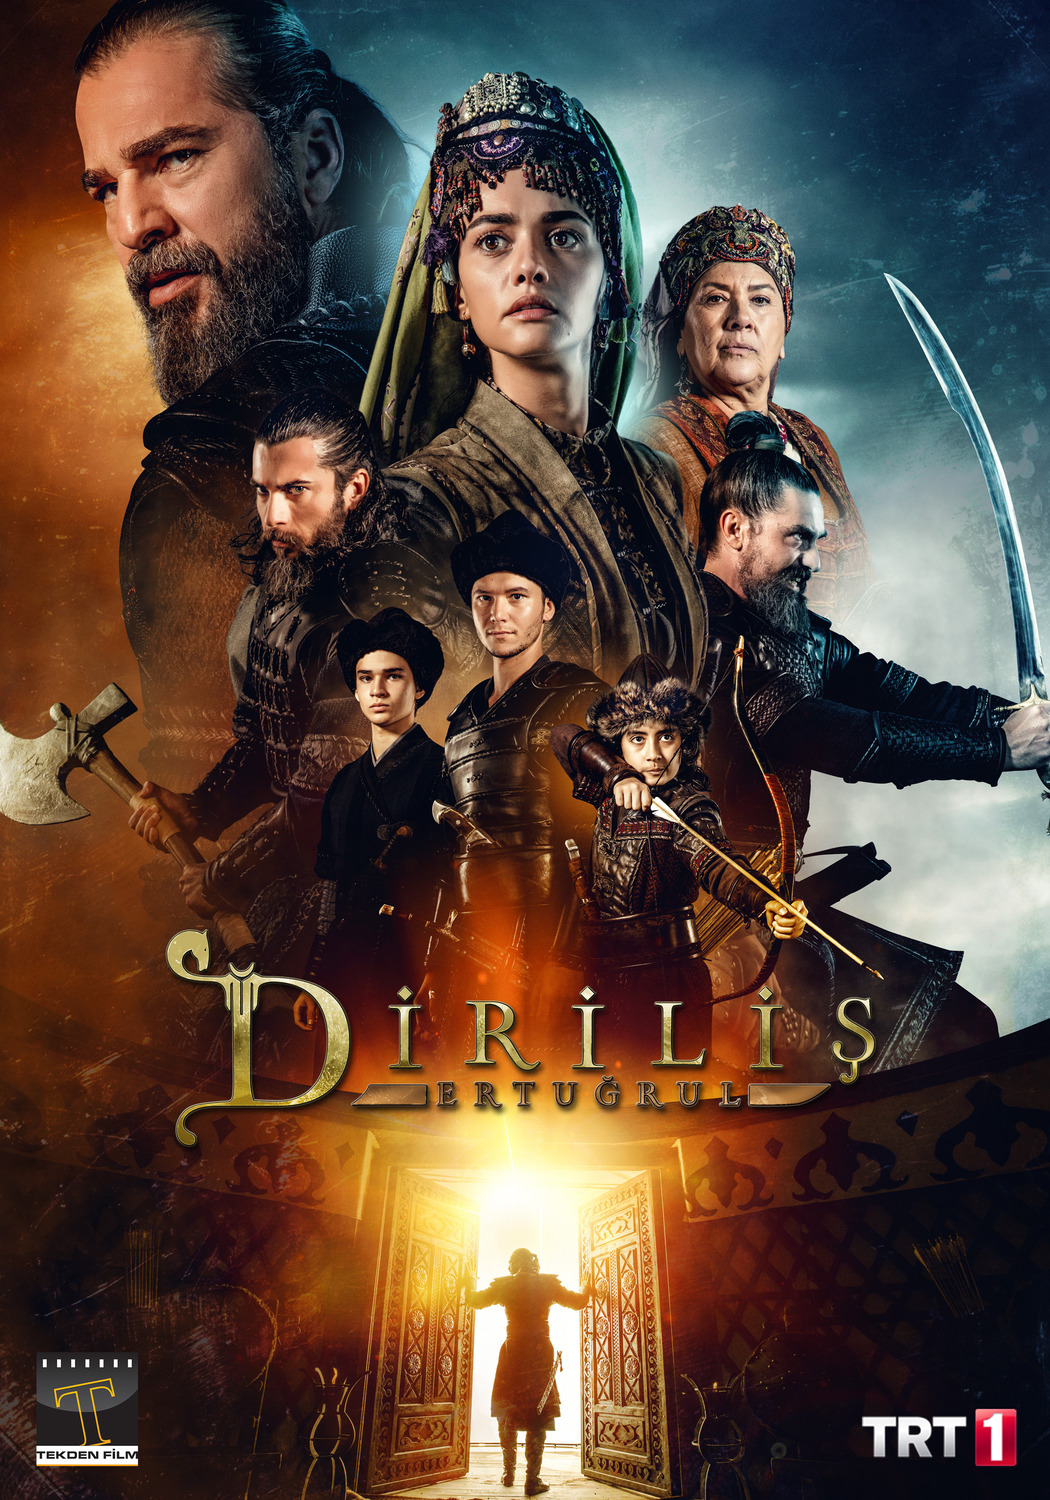 Extra Large TV Poster Image for Dirilis: Ertugrul (#27 of 30)